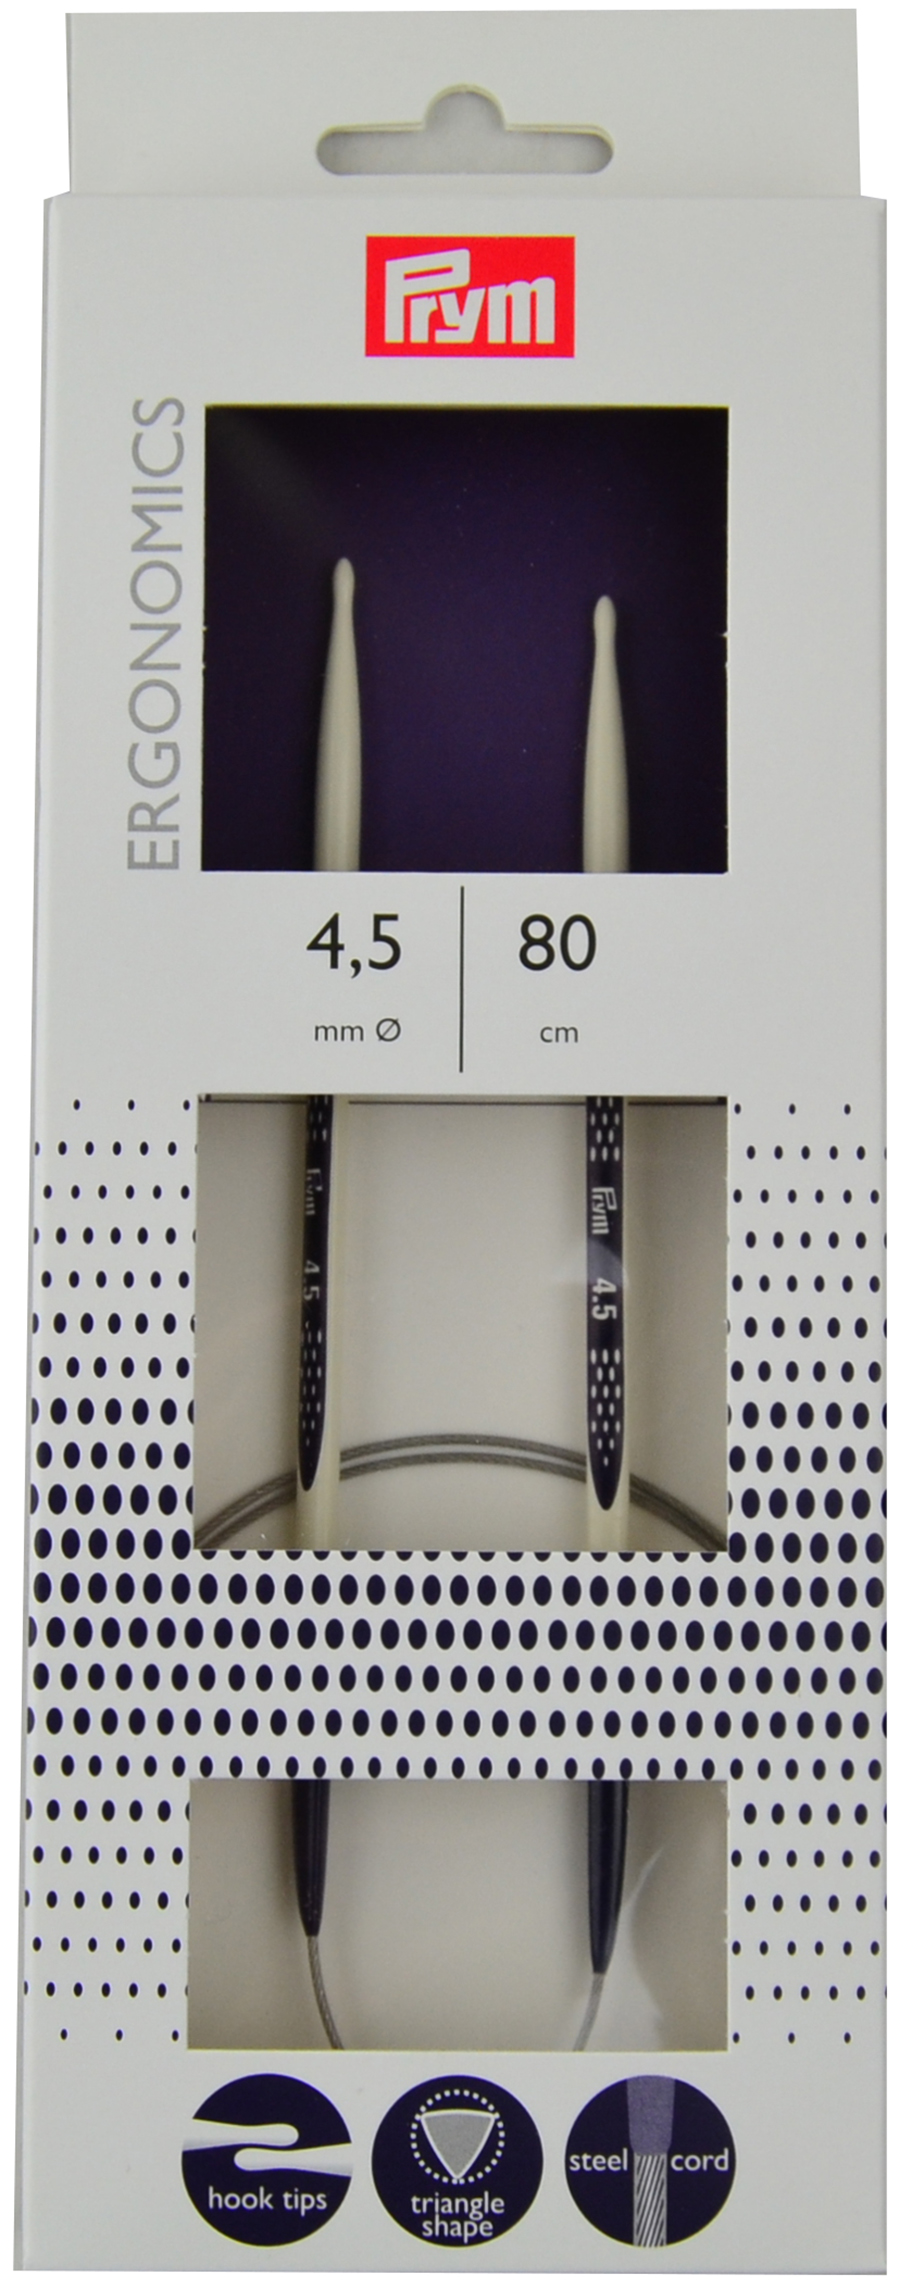 Prym Ergo Crochet Hook 7 4.5mm